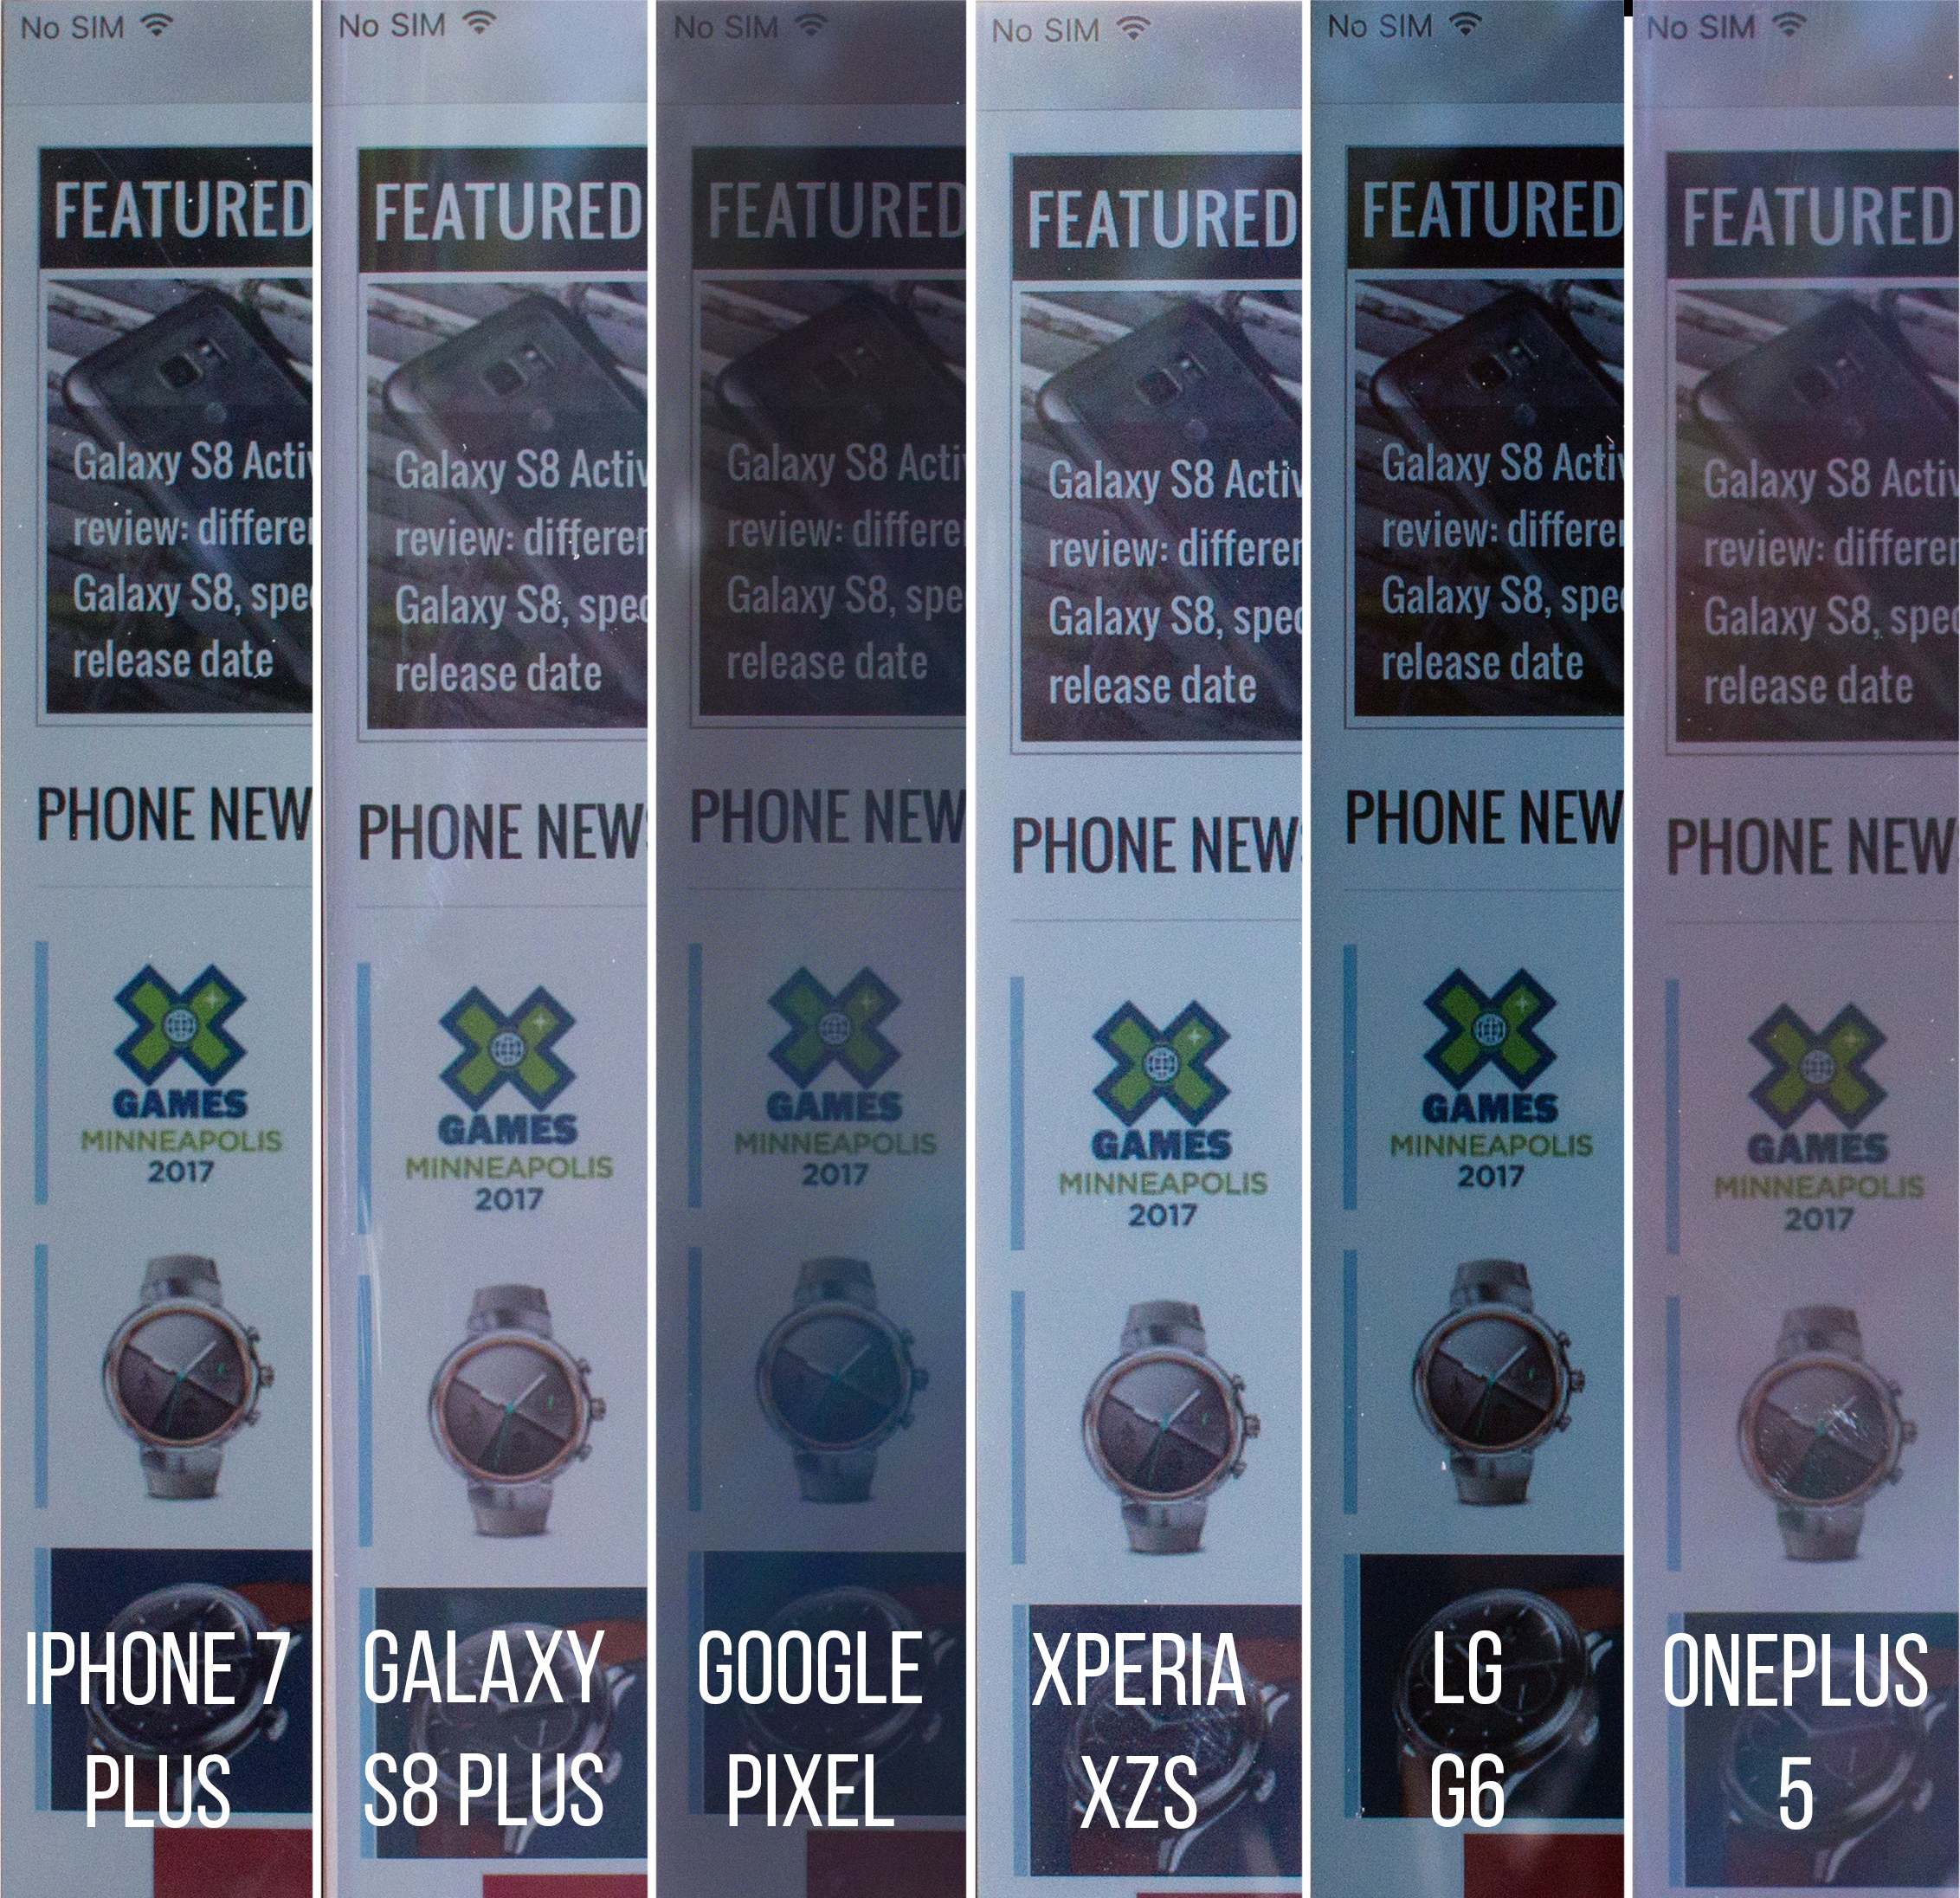 iphone 7 galaxy s8 oneplus 5 screen comparison 2